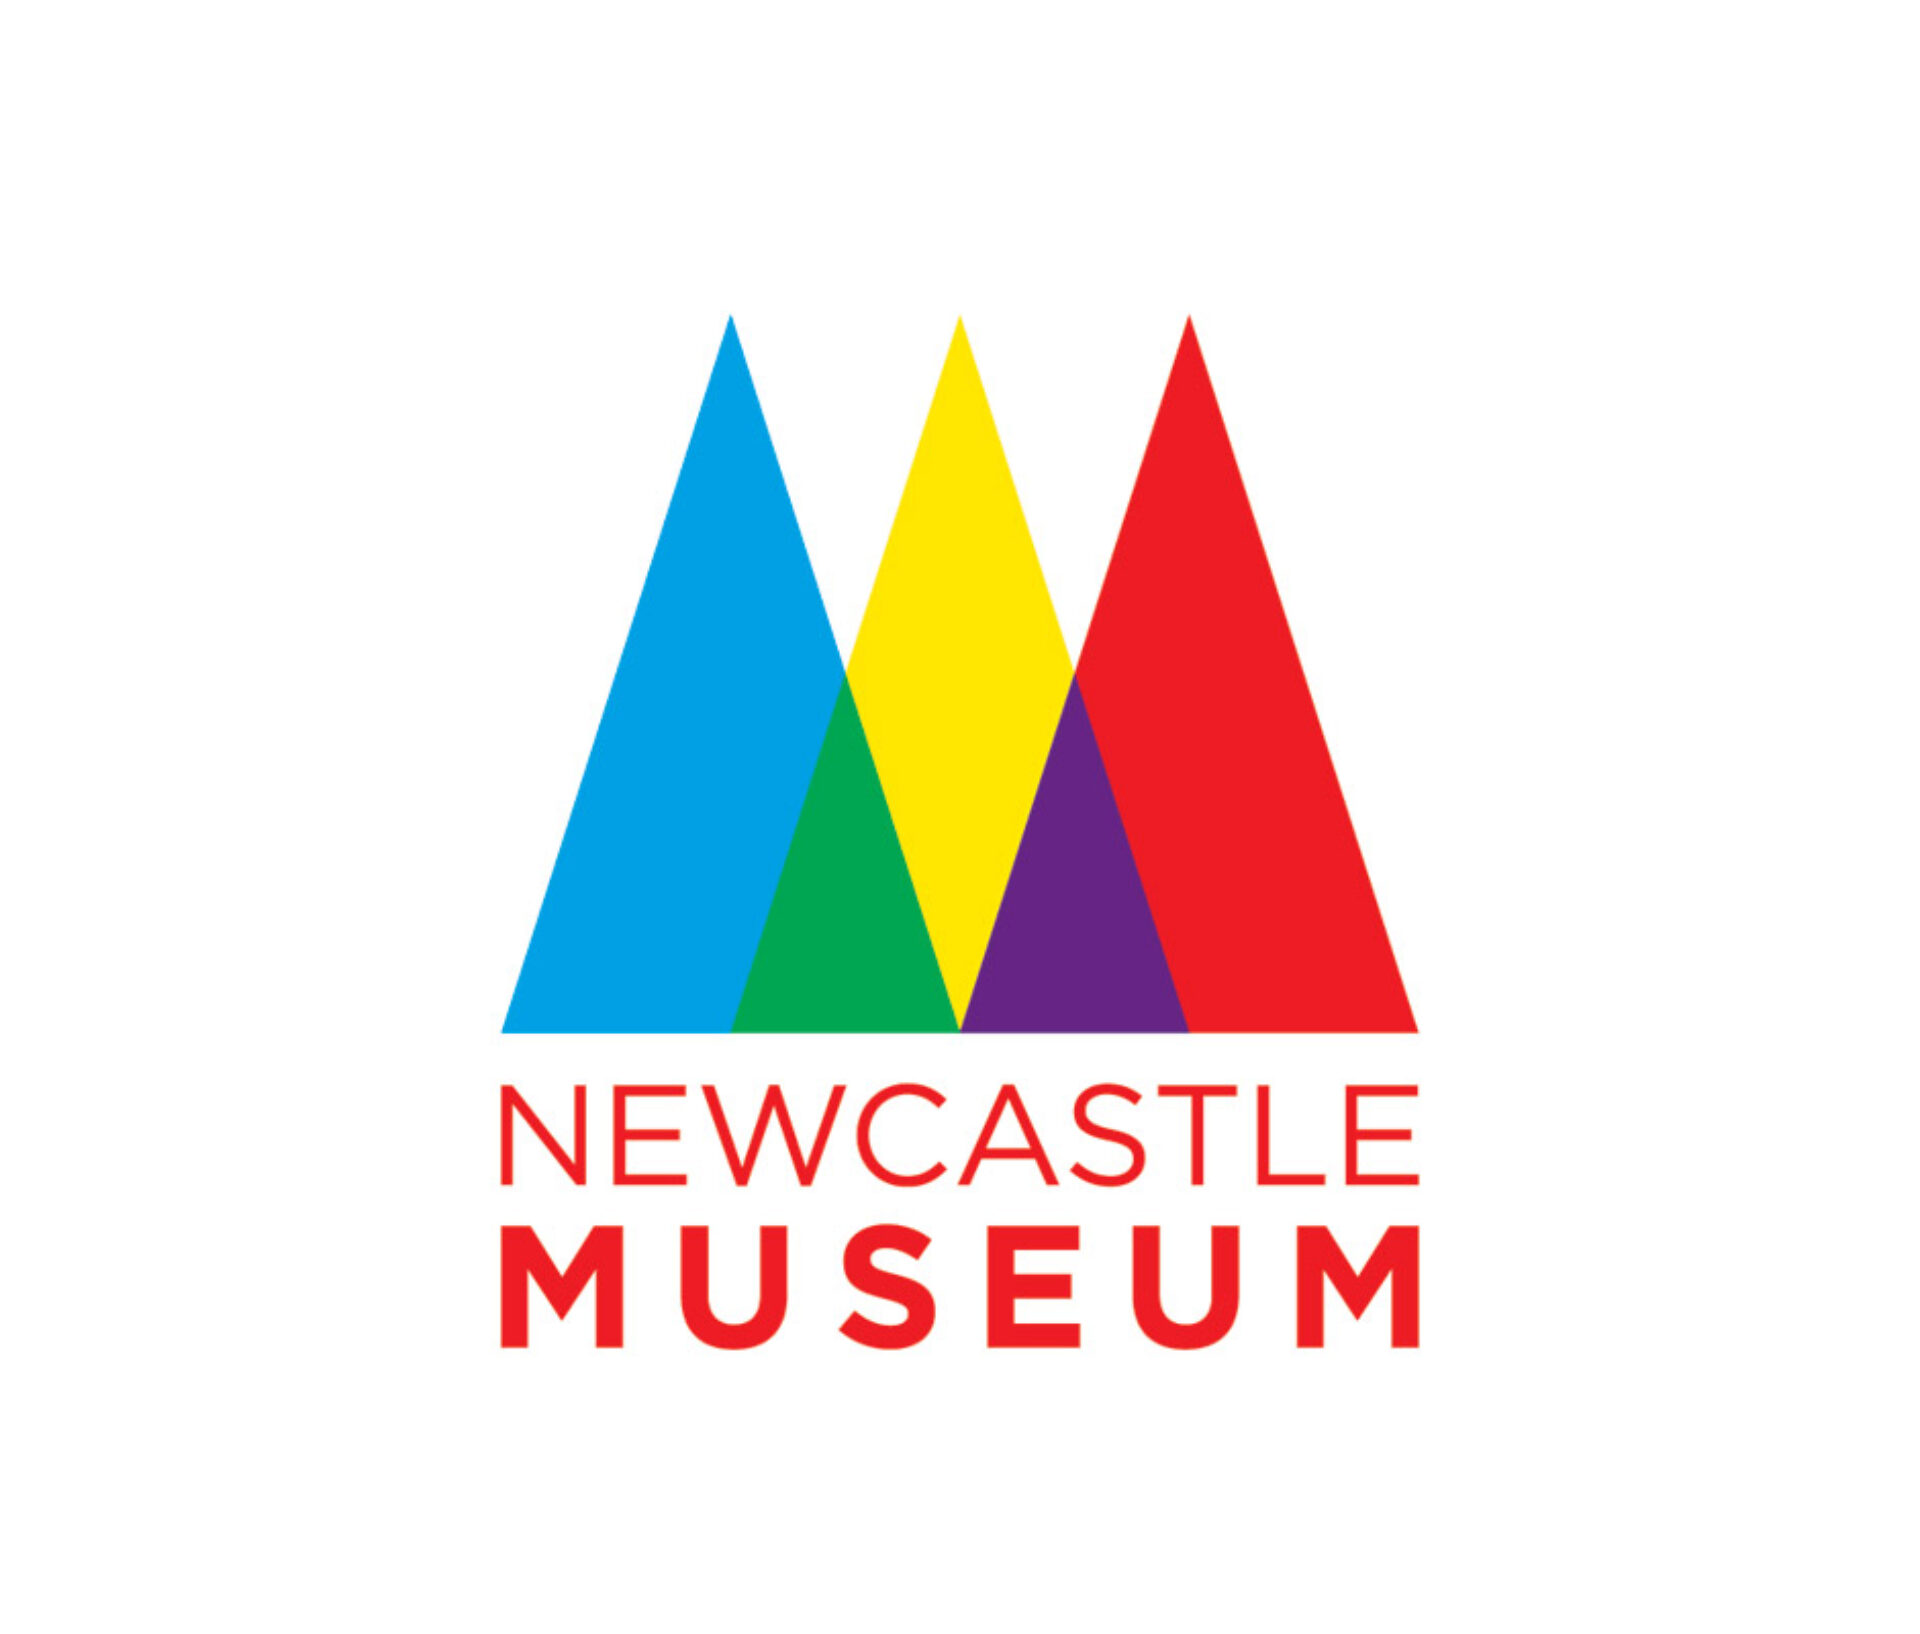 Newcastle museum 01